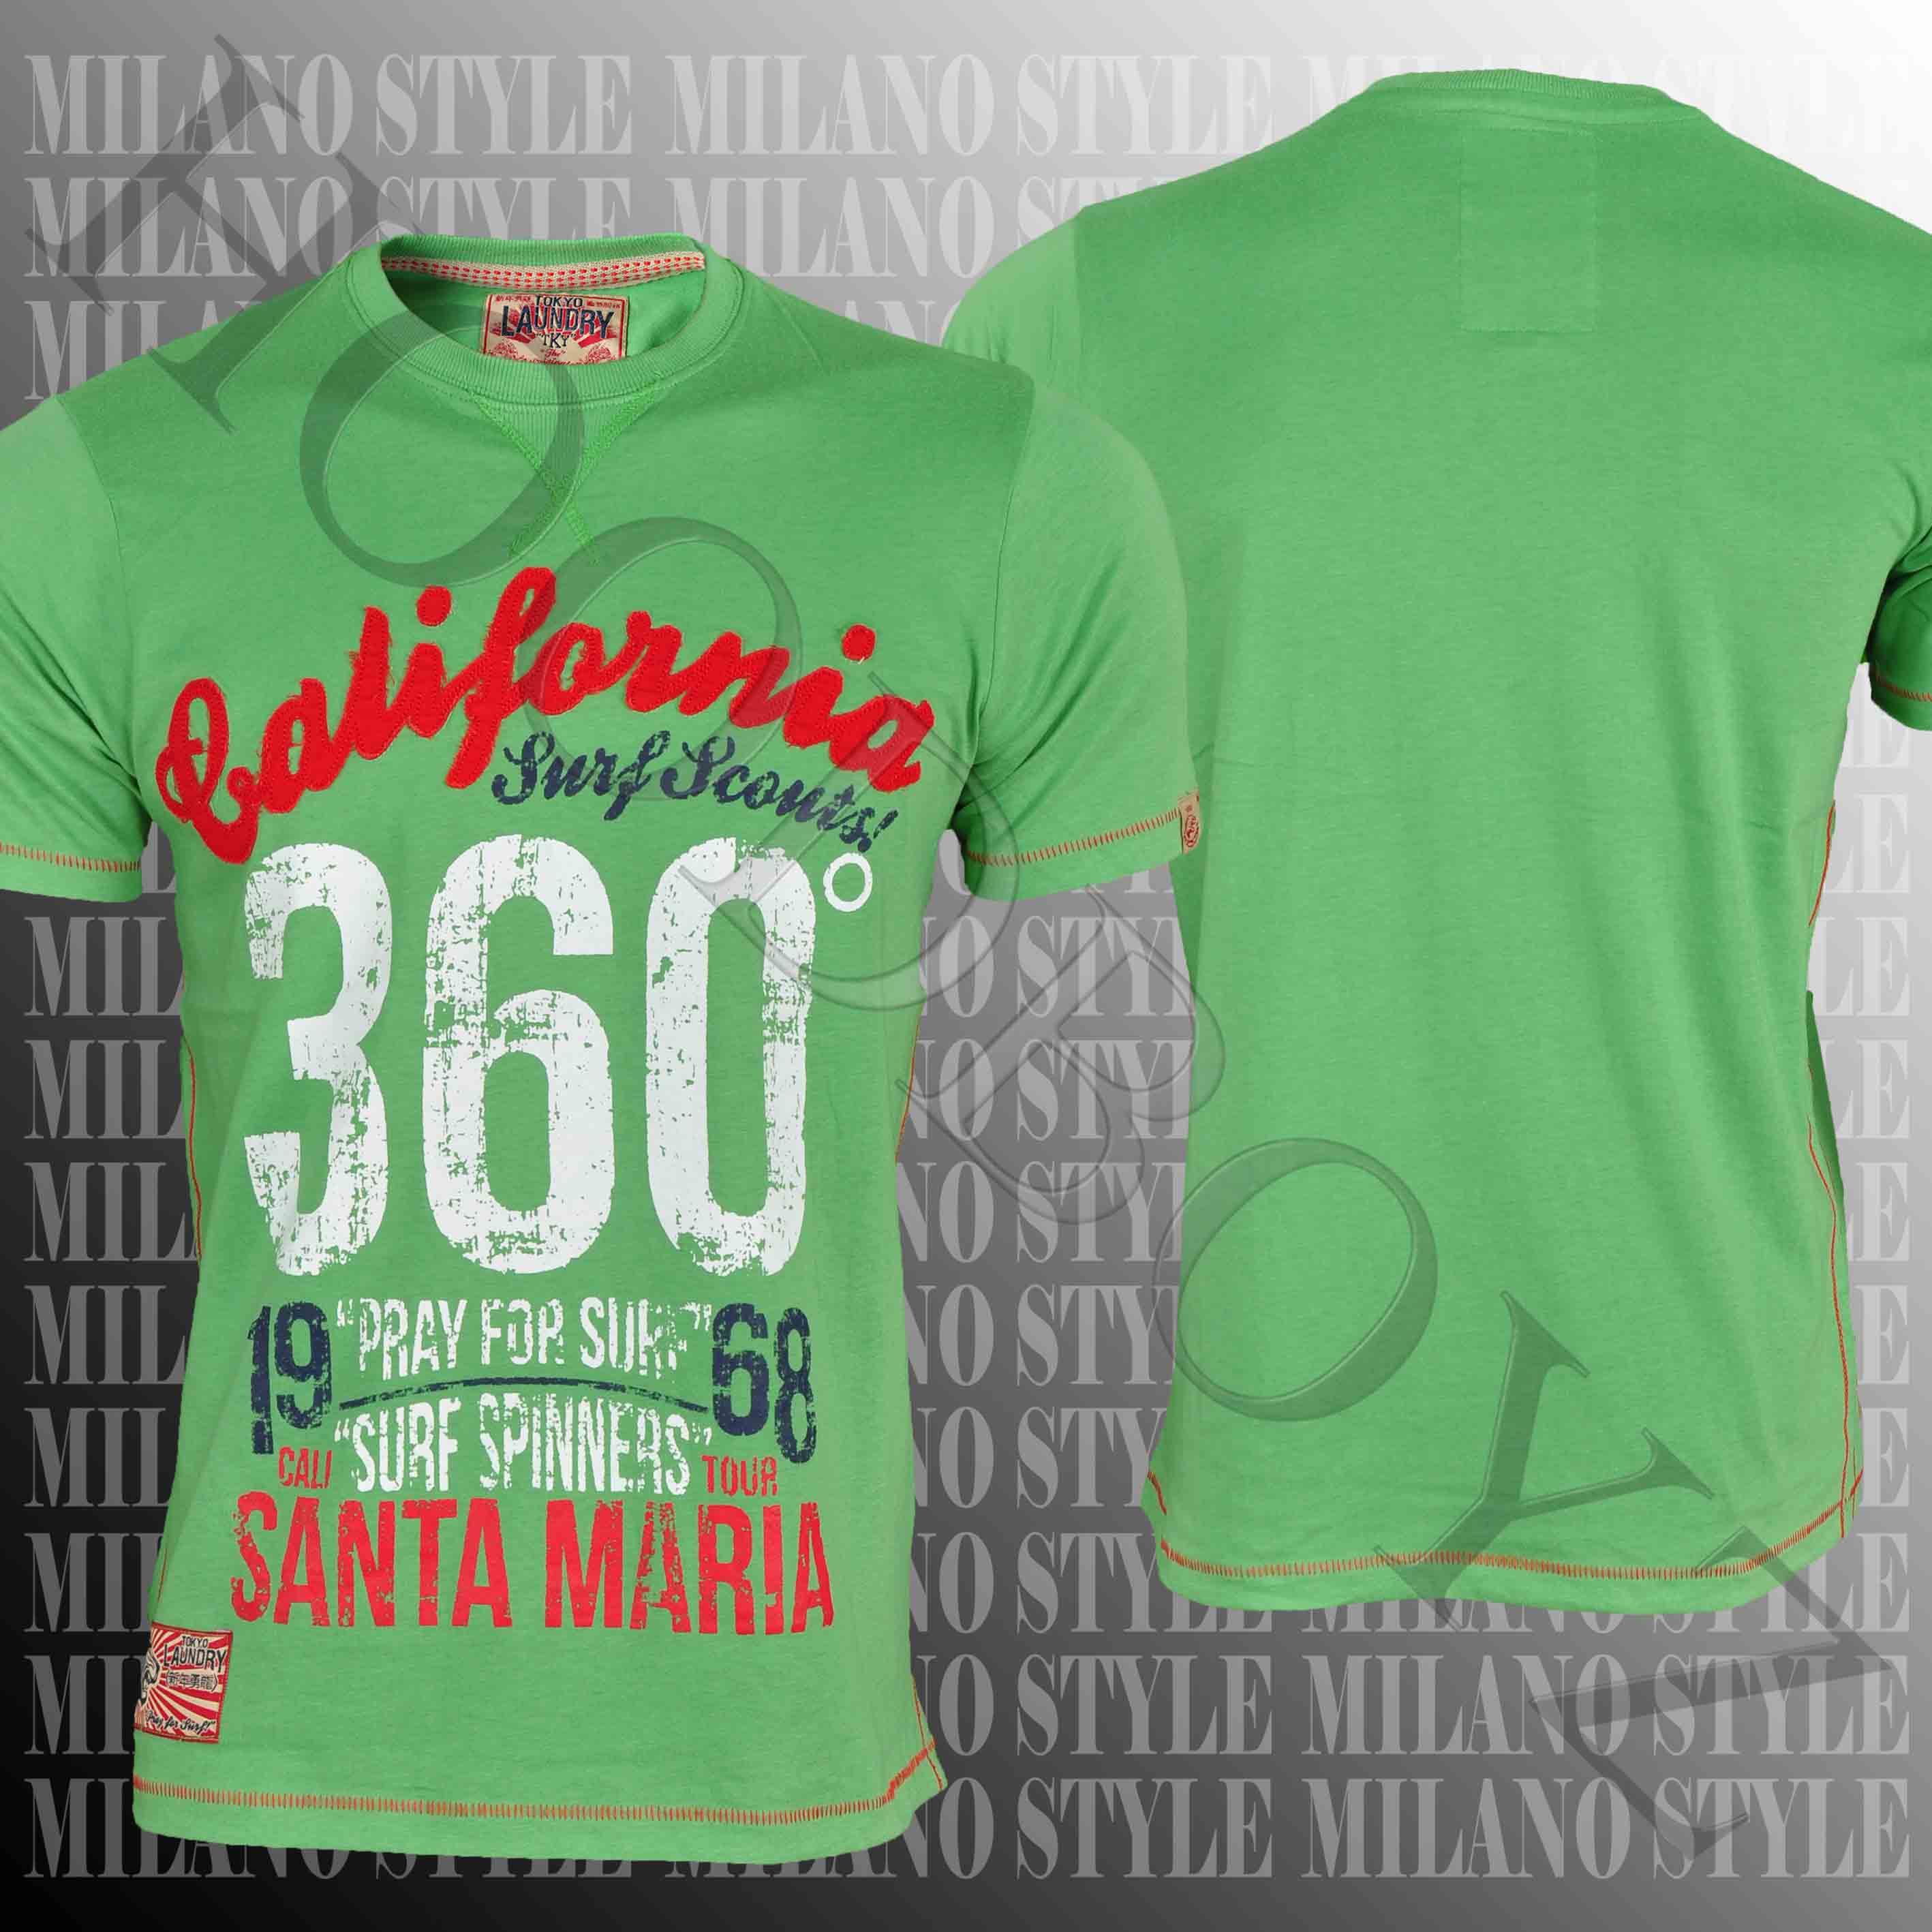 Foto Milano Style California Camisetas Verde foto 184541